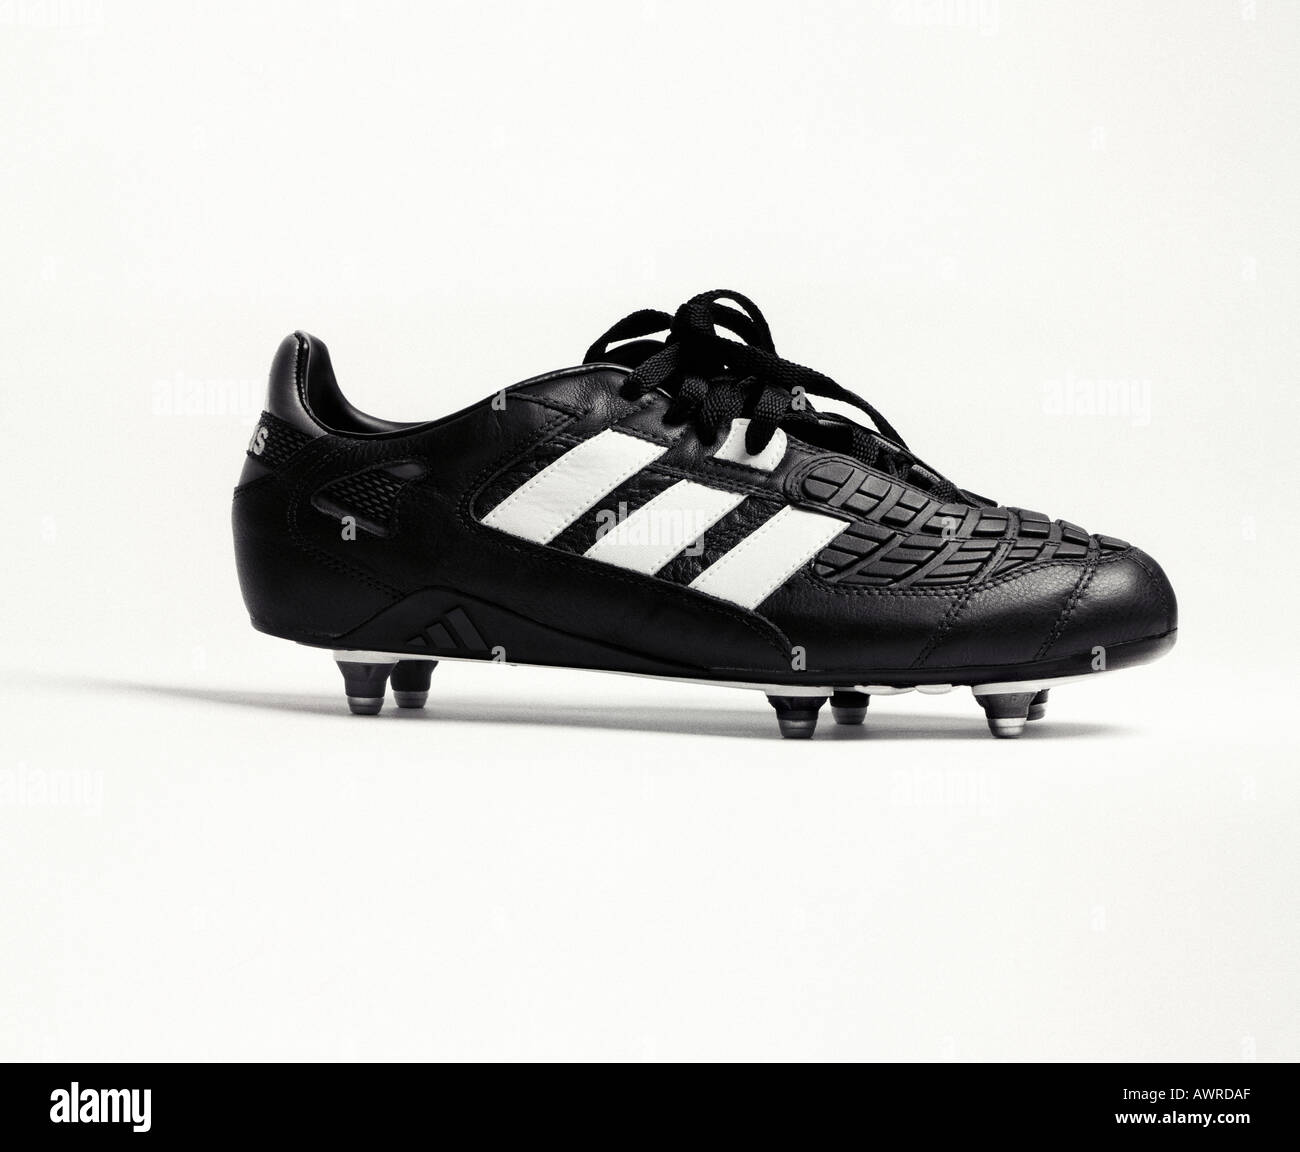 an adidas predator football boot Stock Photo - Alamy